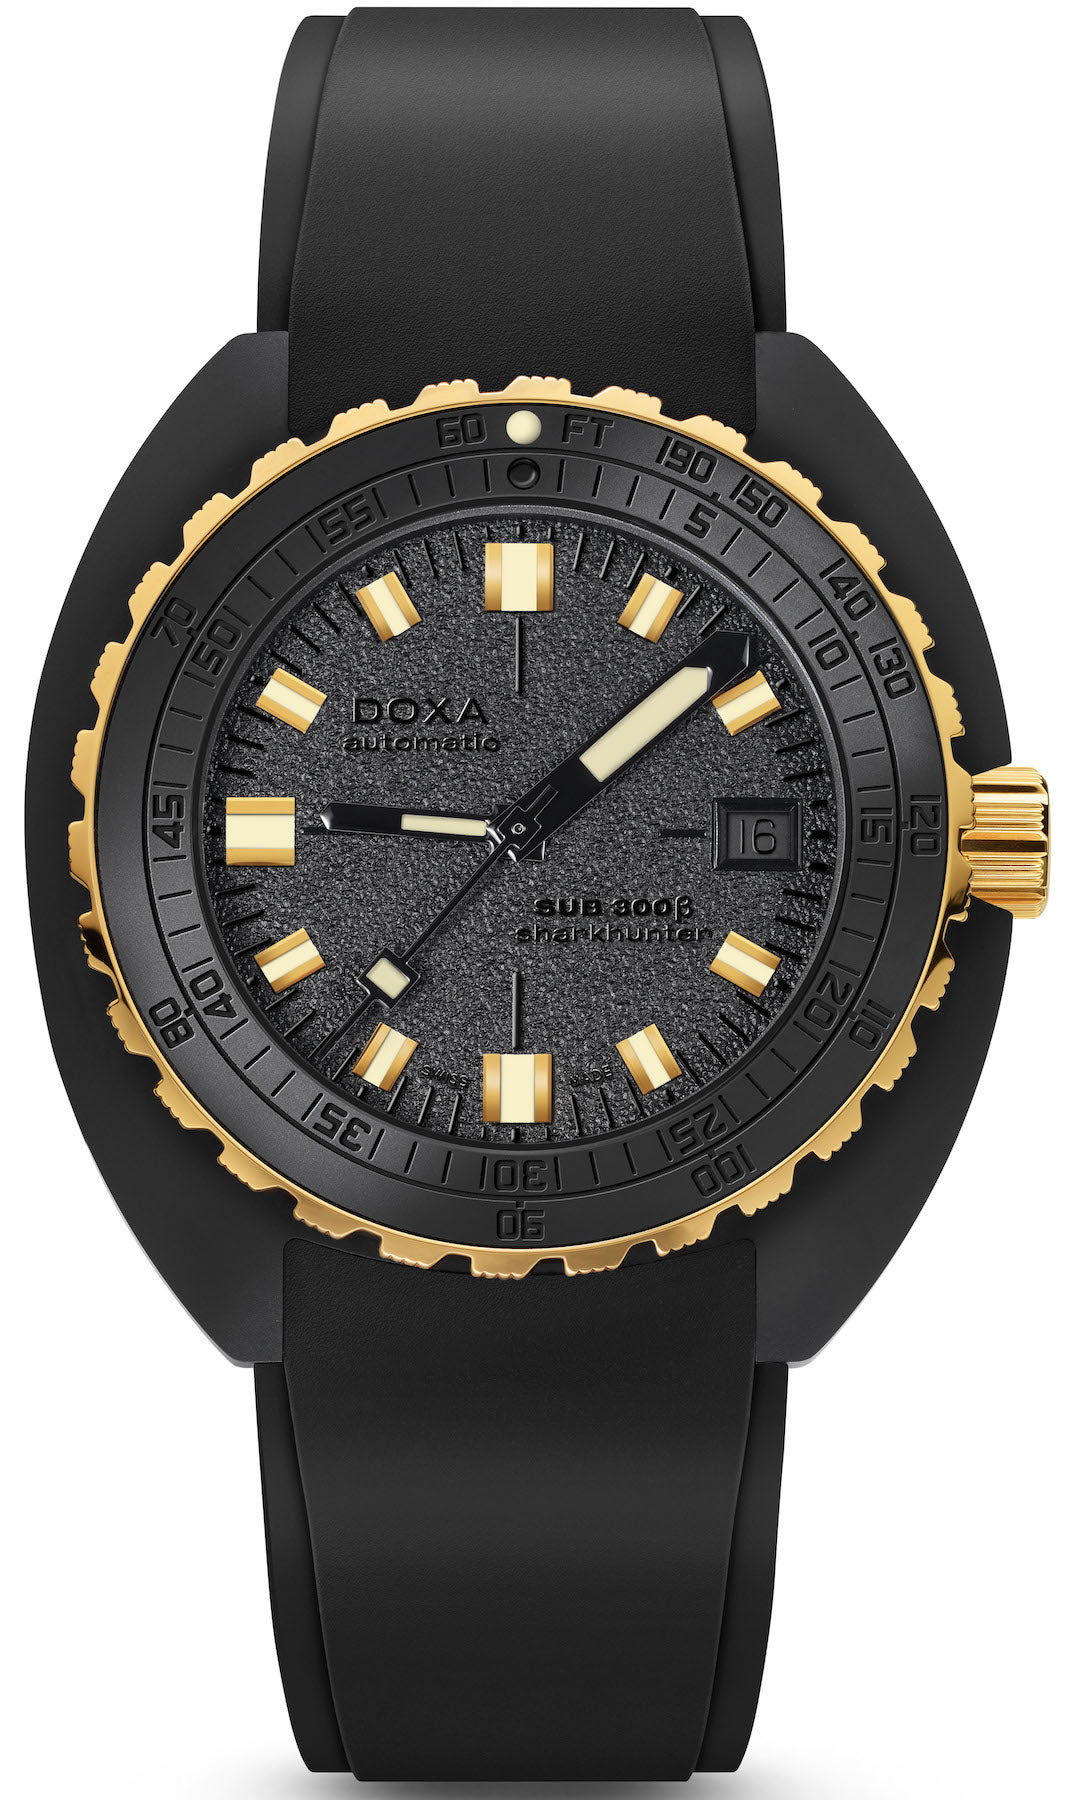 Photos - Wrist Watch DOXA Watch SUB 300 Beta Sharkhunter 830.20.101.20 DOX-179 